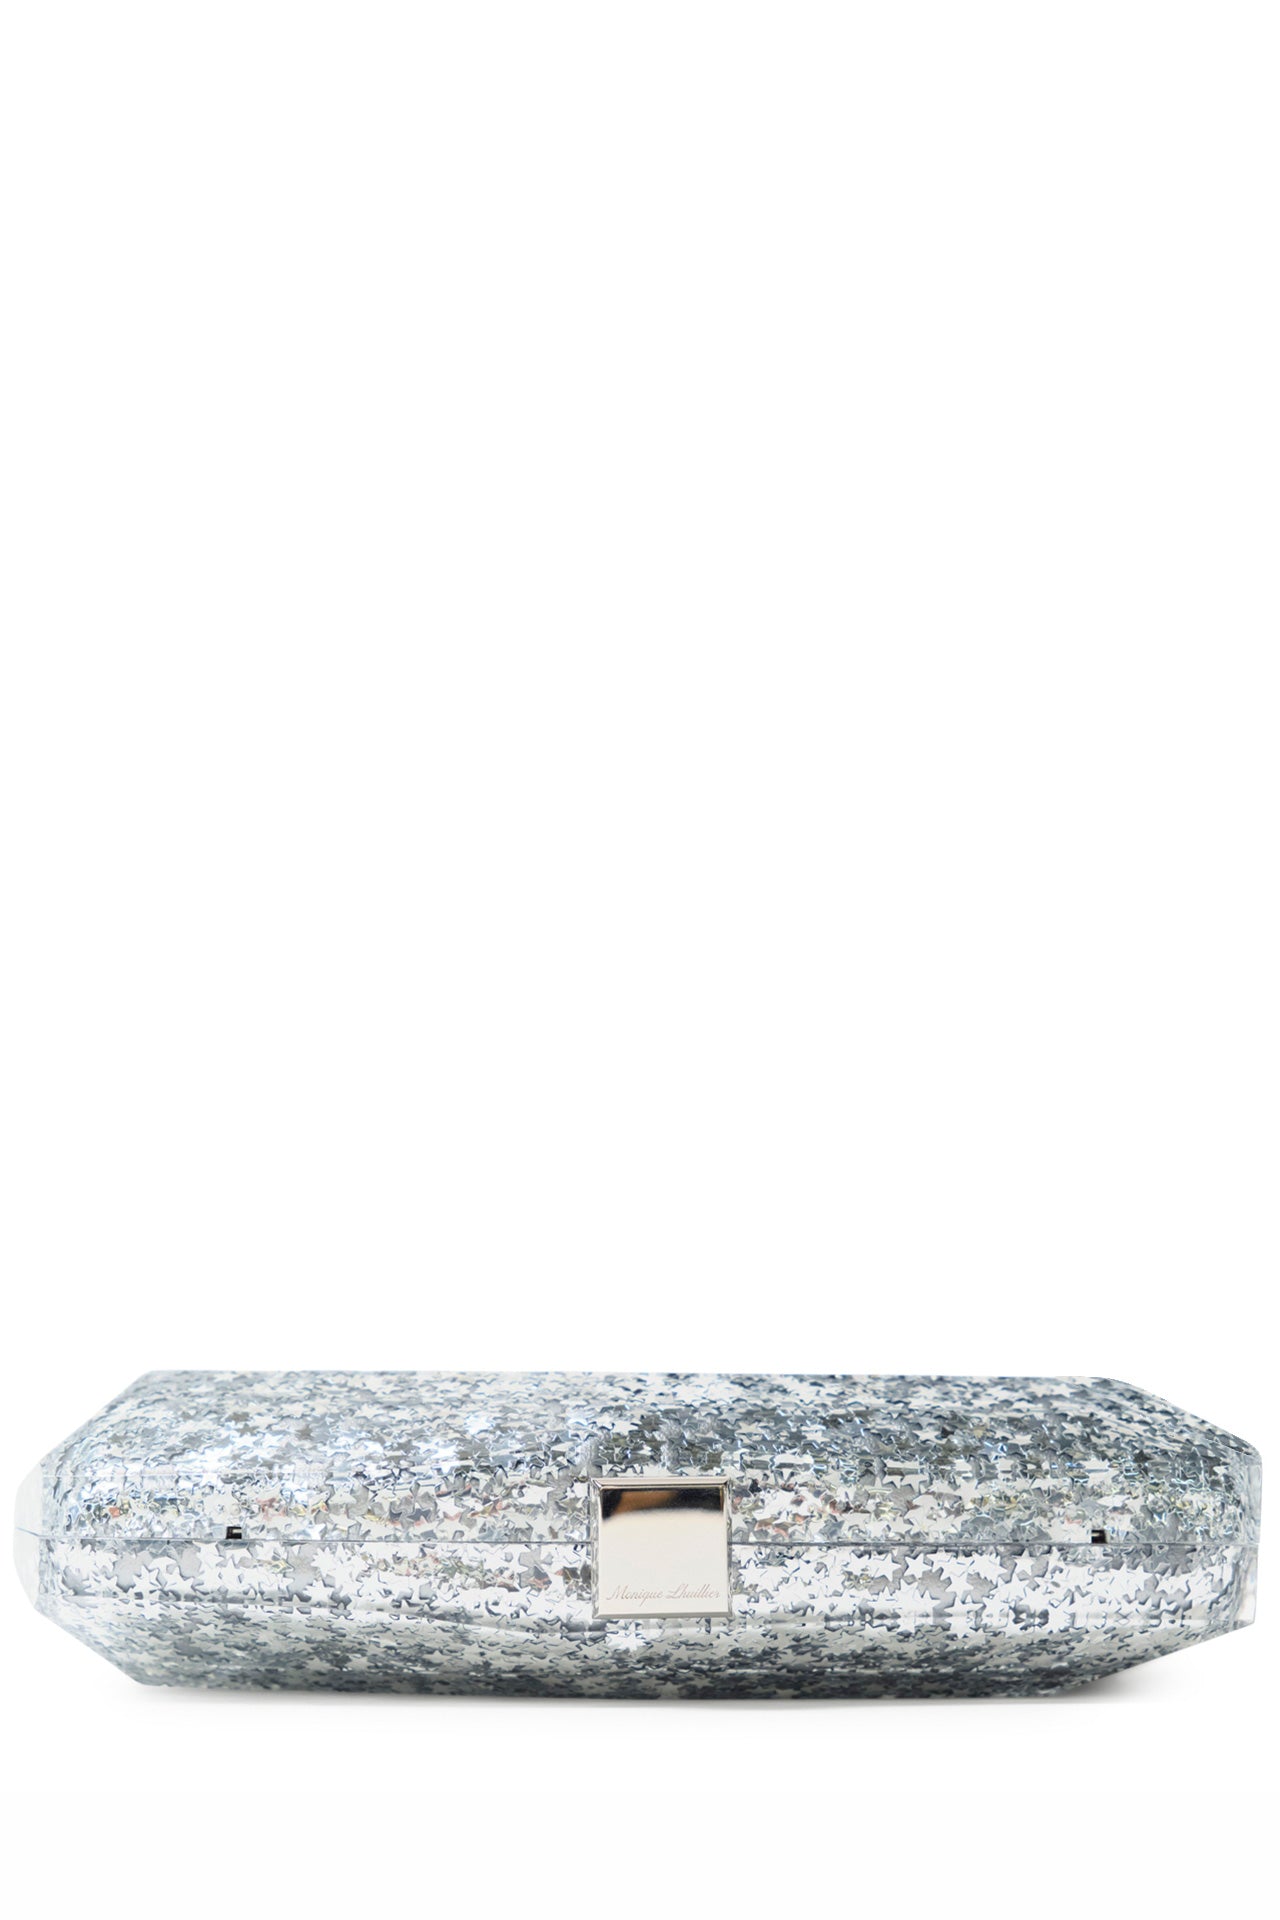 Monique Lhuillier lucite faceted minaudière handbag in Silver Star Glitter with detachable chain - flat.